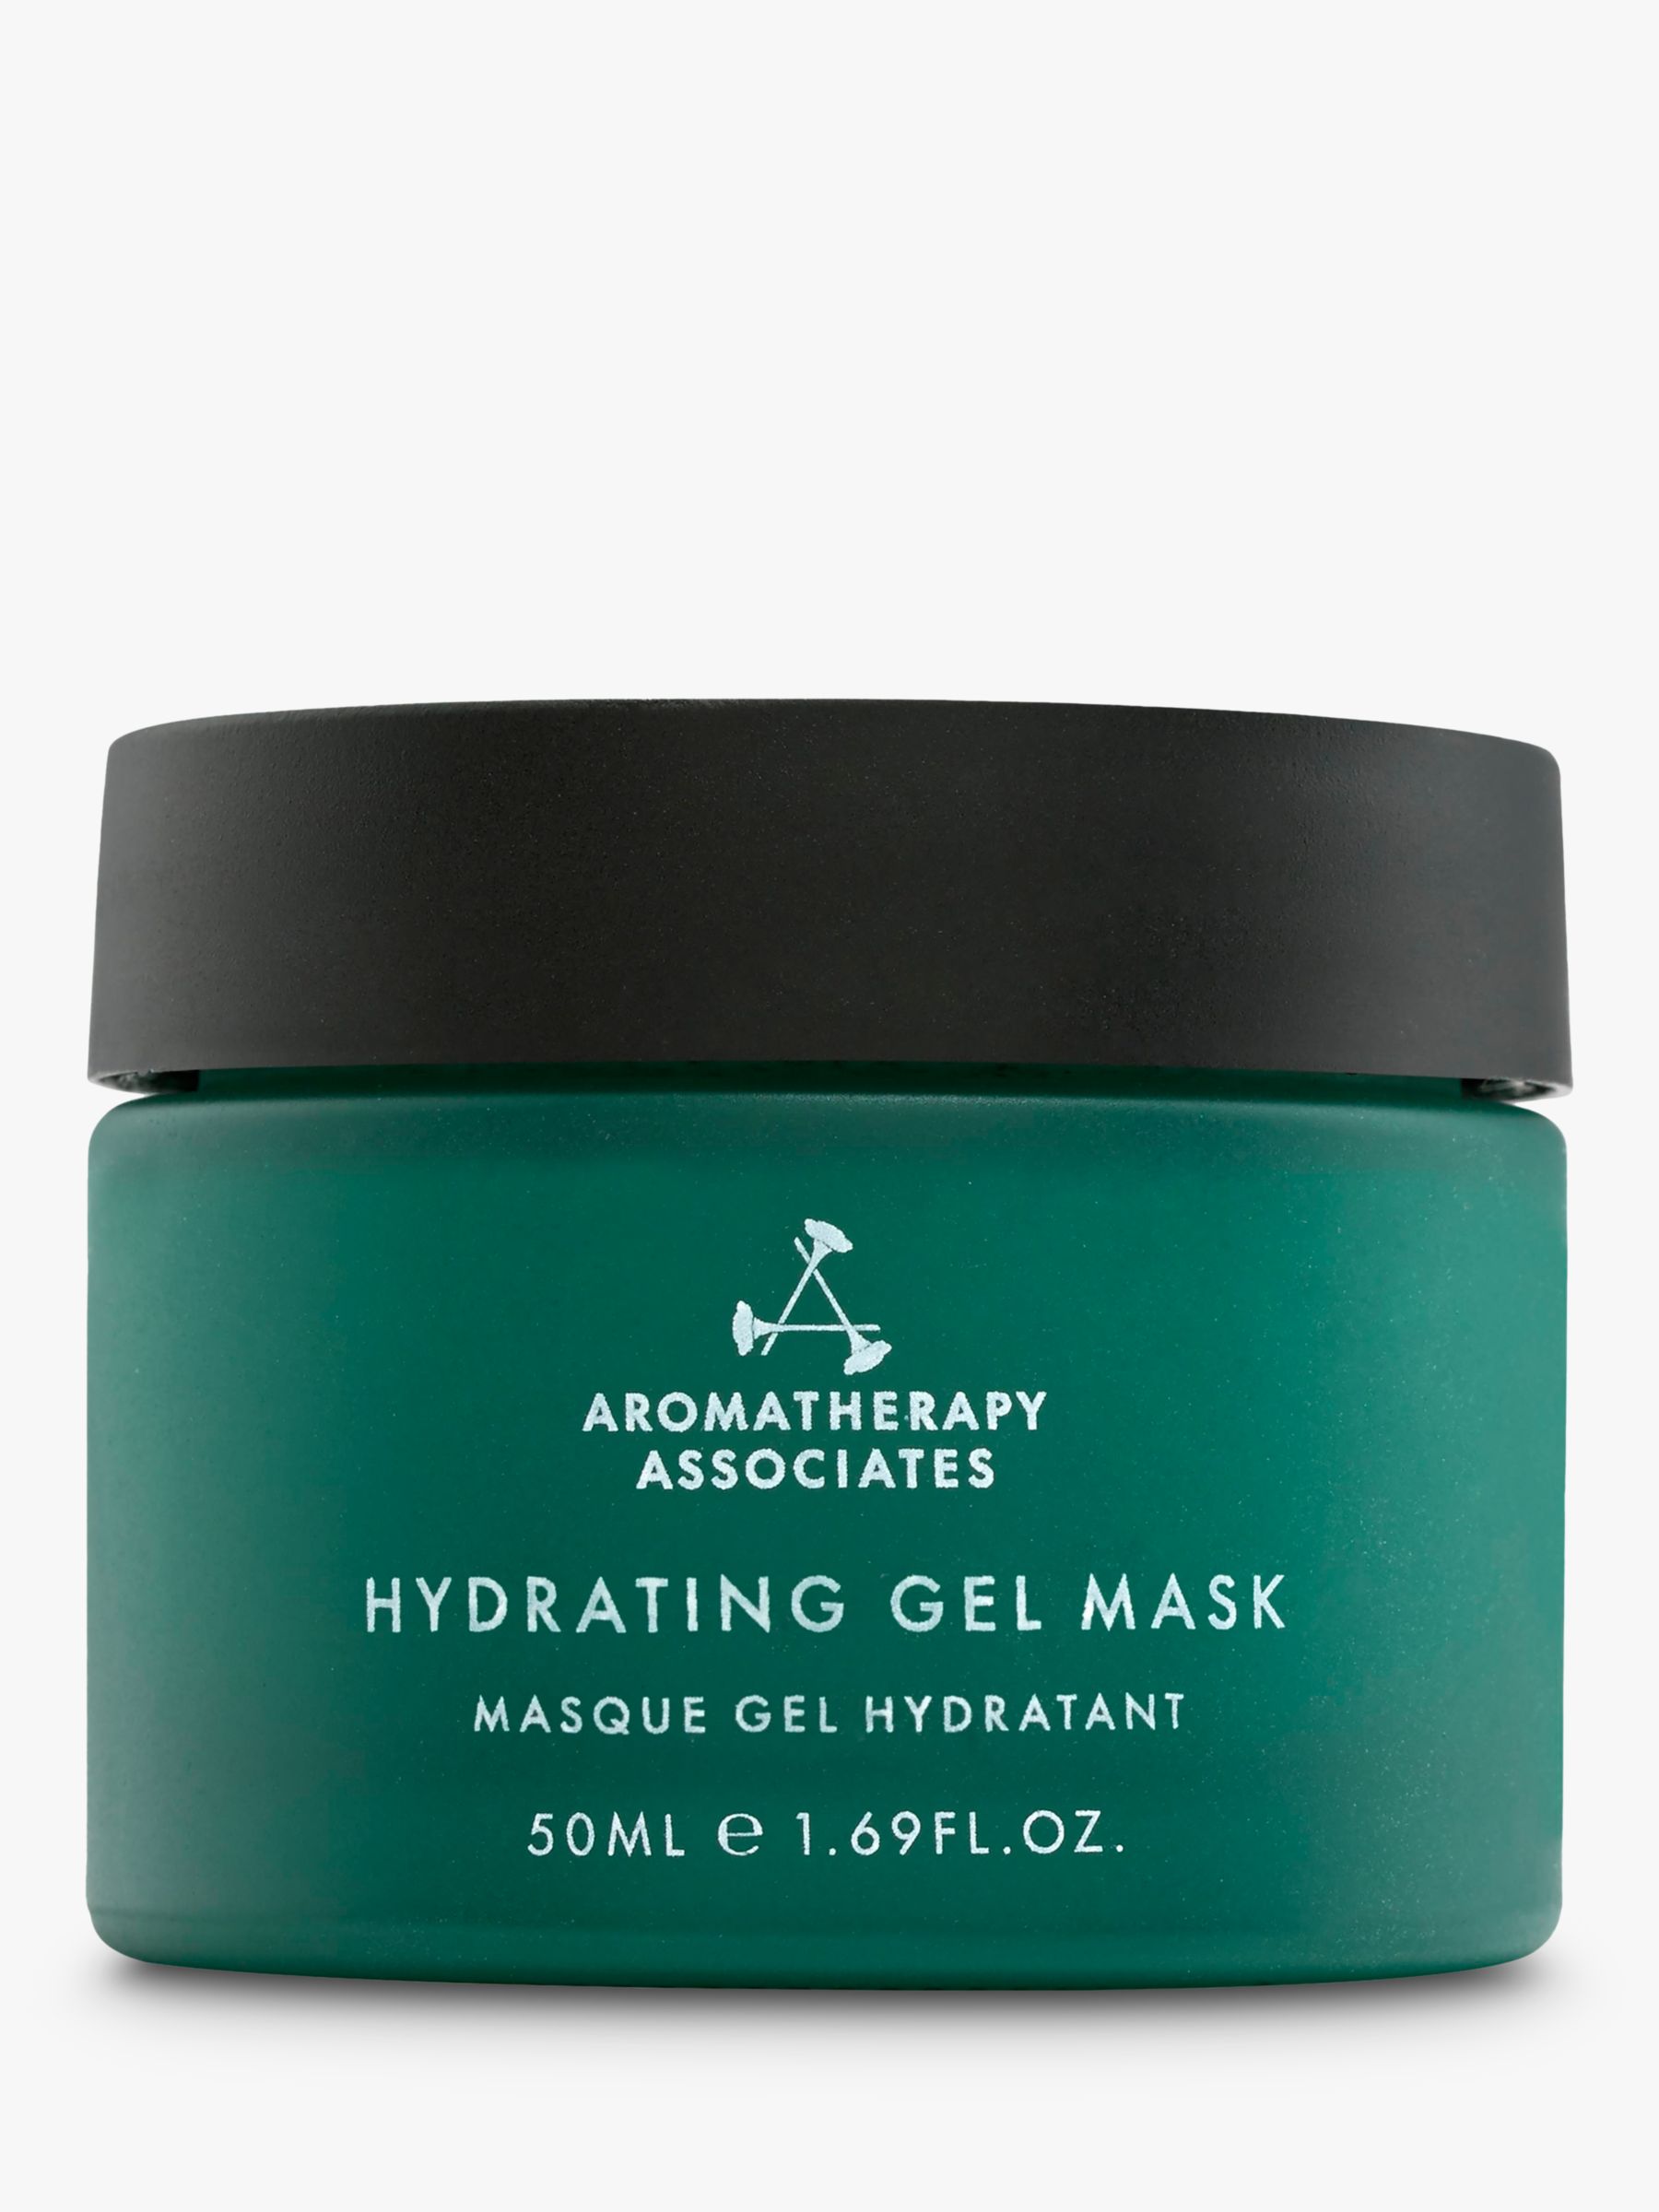 Aromatherapy Associates Hydrating Gel Mask, 50ml 2